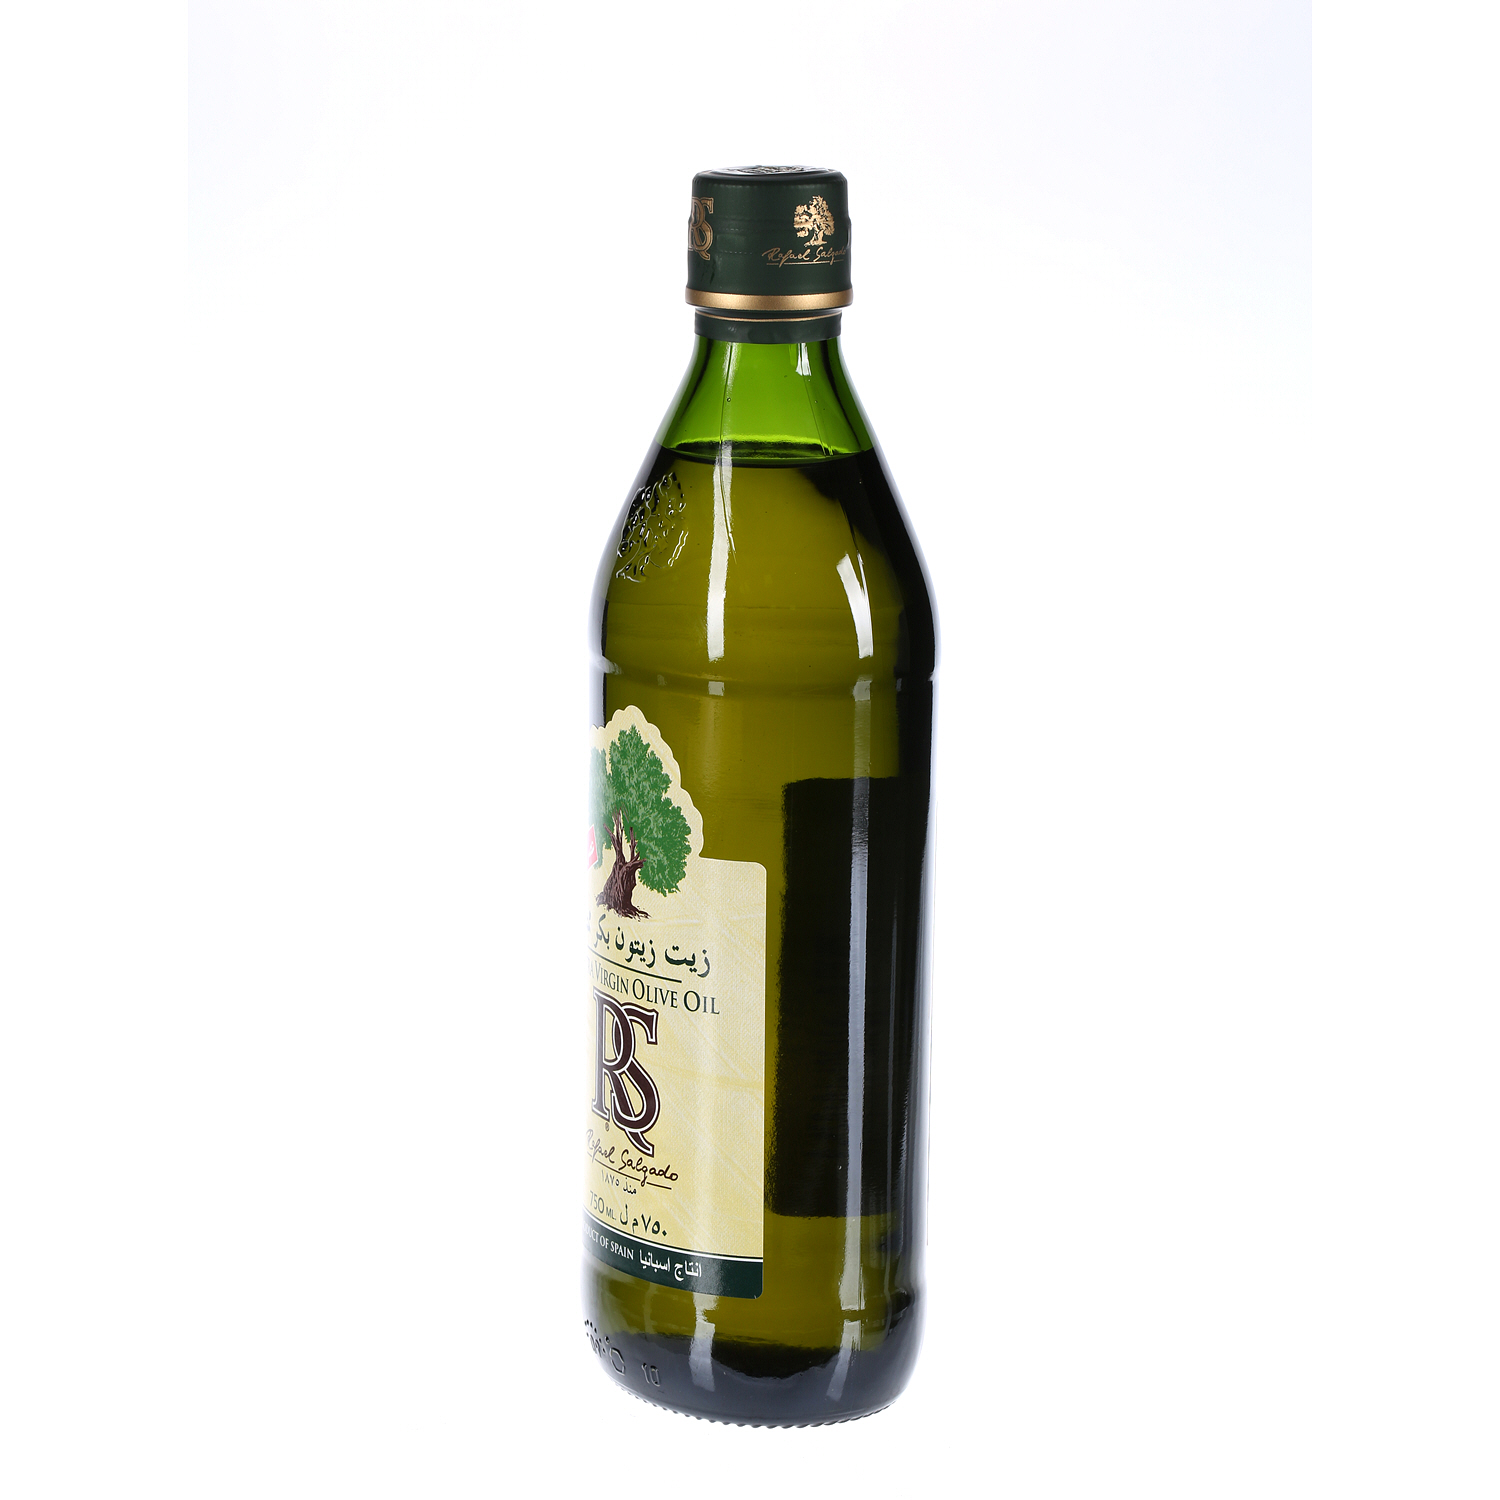 Rafael Salgado Extra Virgin Olive Oil 750ml